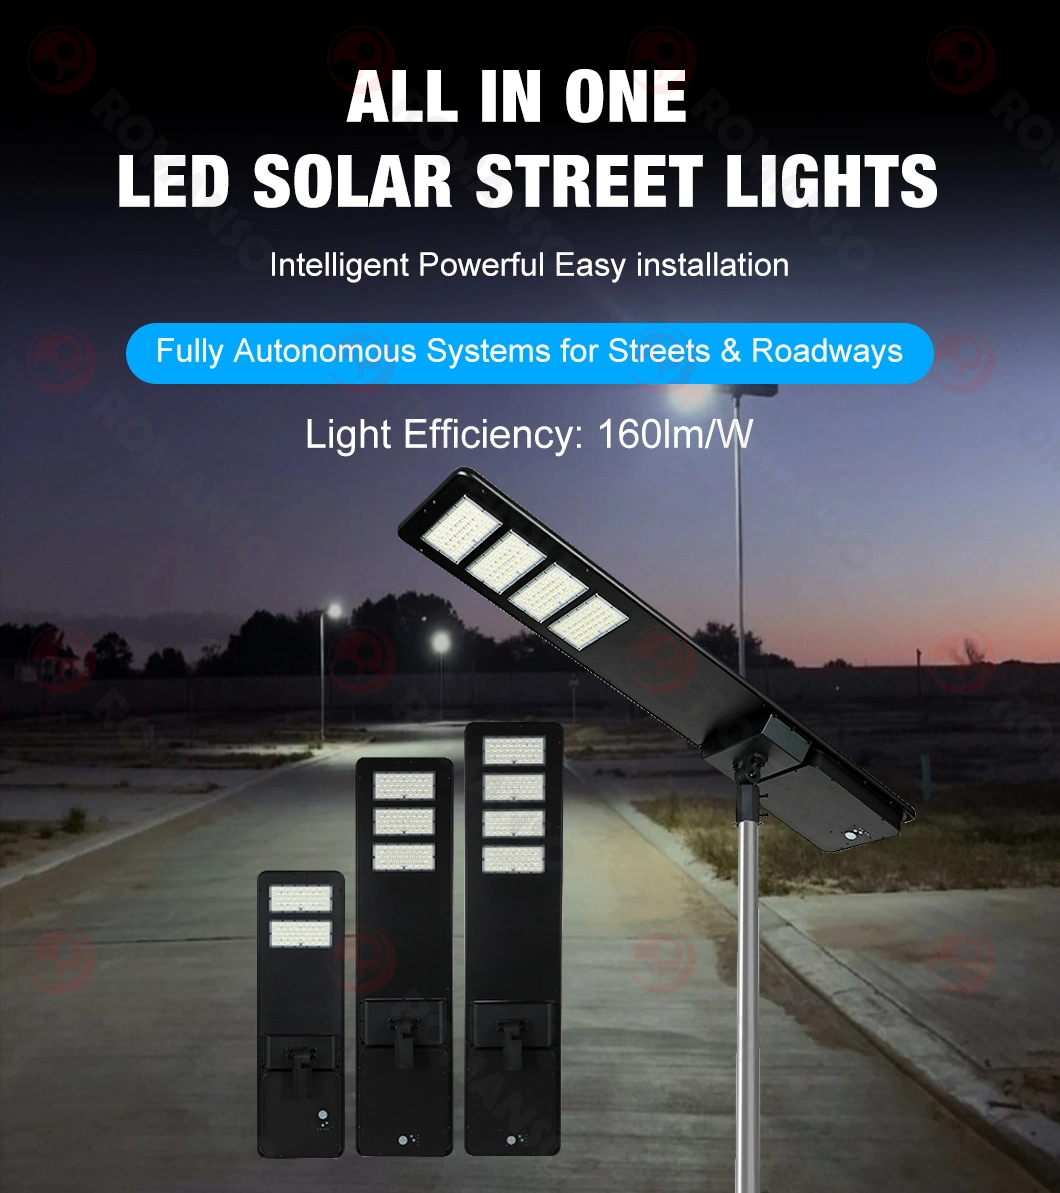 3 Years Wrranty Solar Power High Luminous LED Solar Light